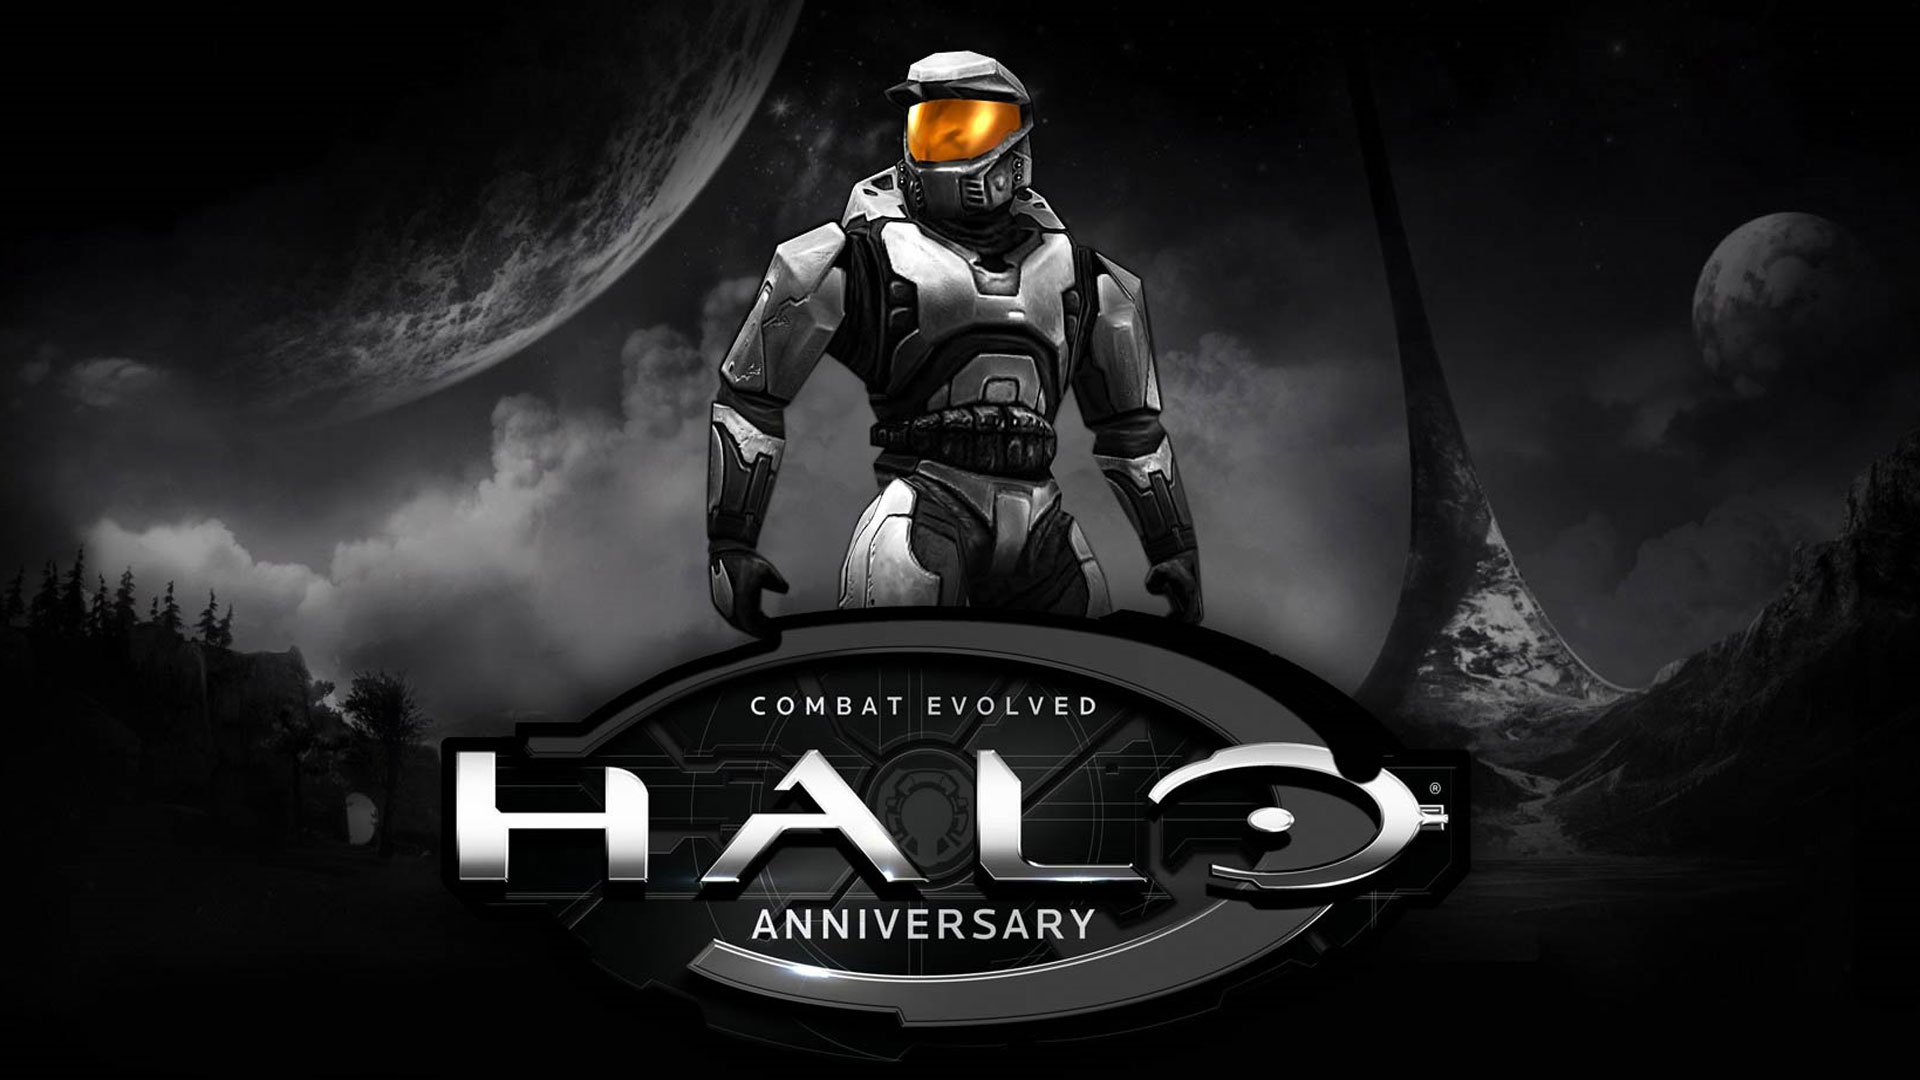 Halo CE Anniversary, Halo: Combat Evolved Wallpaper, 1920x1080 Full HD Desktop